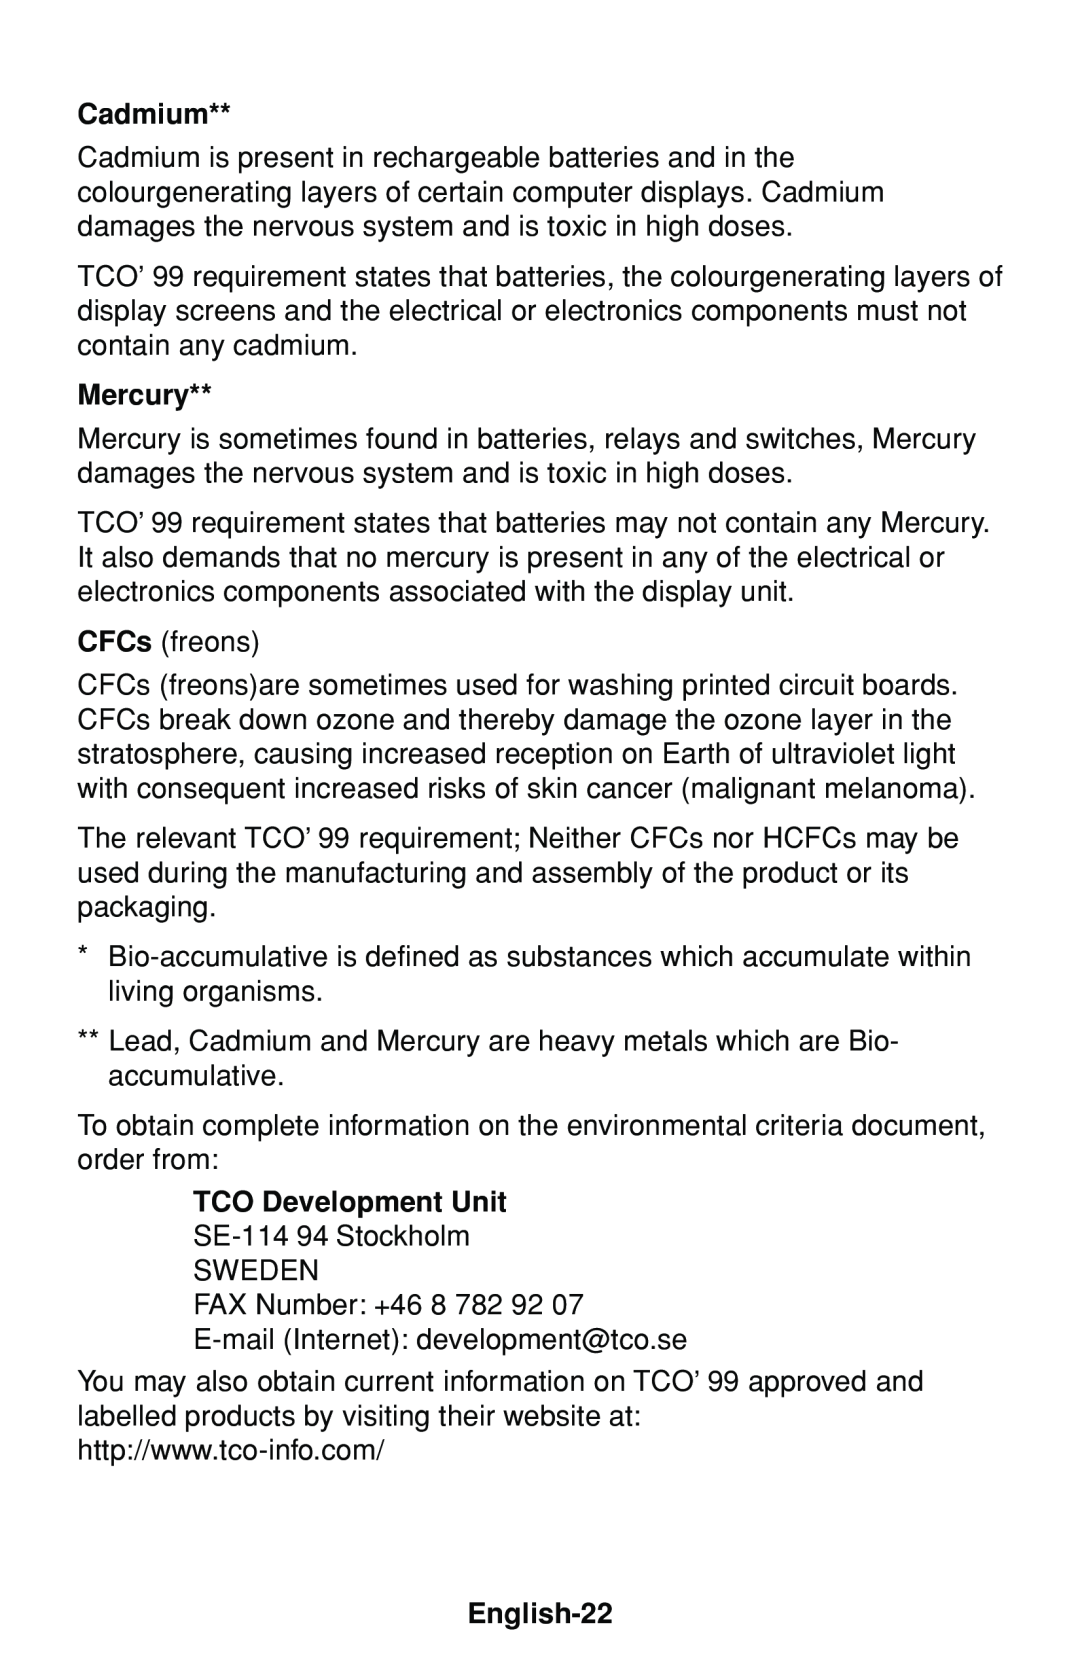 NEC LCD1530V user manual Cadmium, Mercury, TCO Development Unit, English-22 